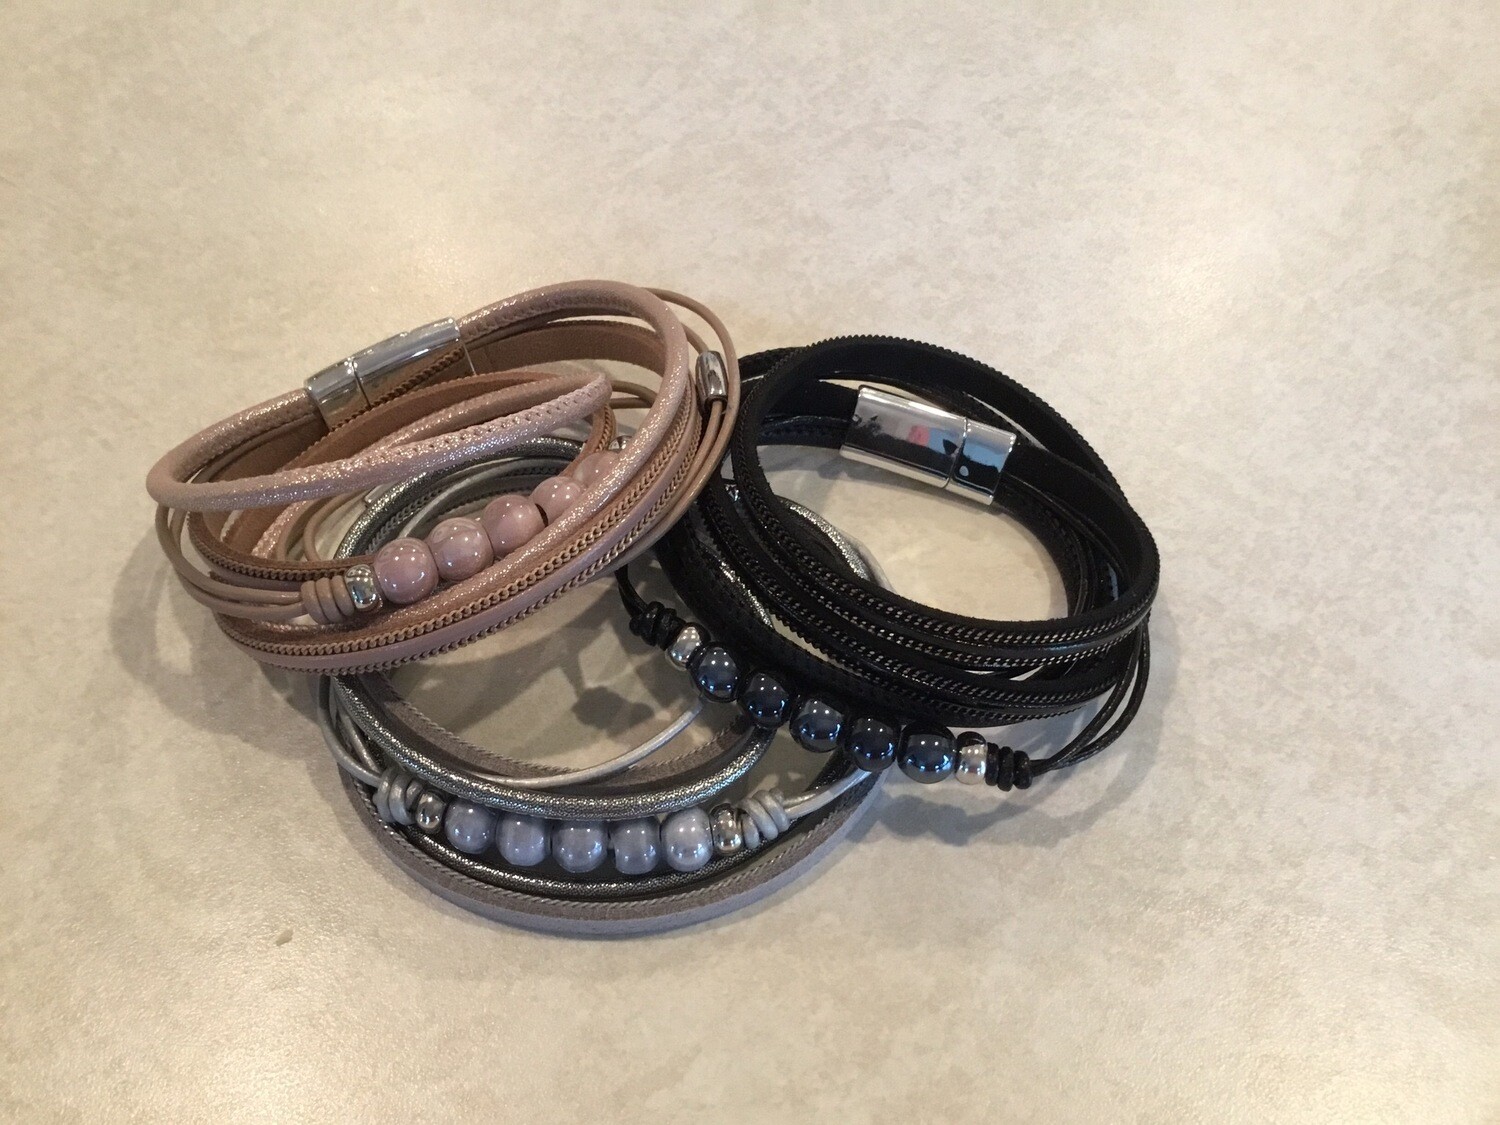 Leather Wrap Bracelet With Ceramic Beads